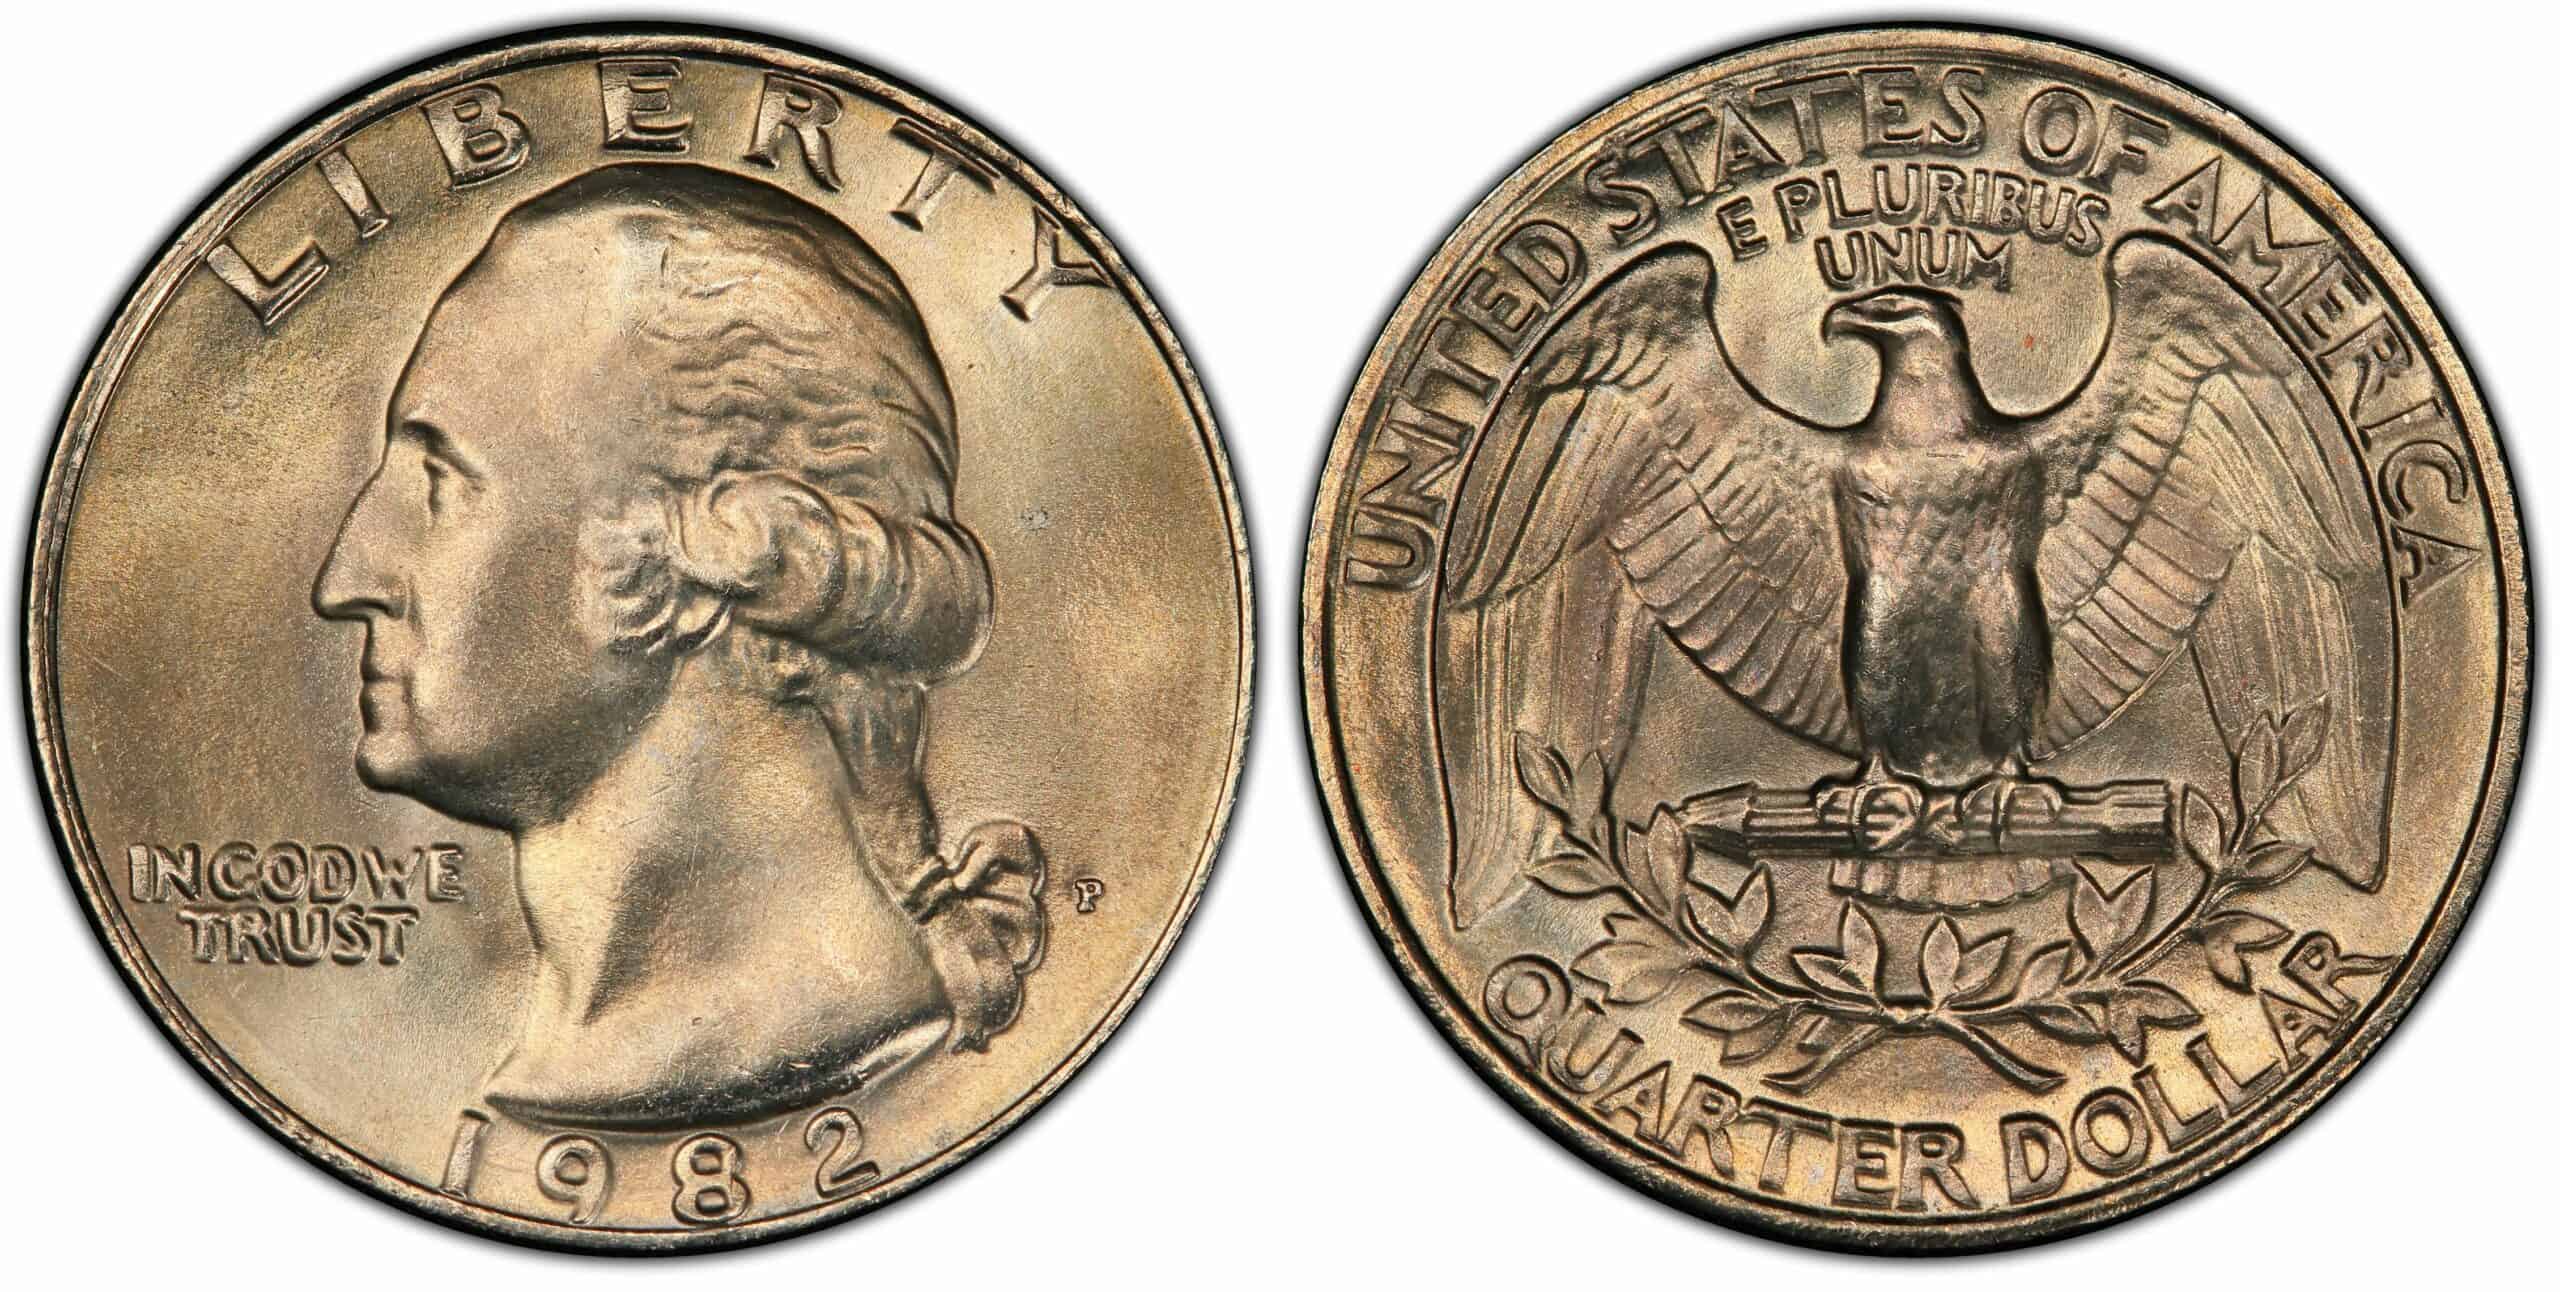 1982 Quarter Value (Rare Errors, “P”, “D” and S Mint Marks)